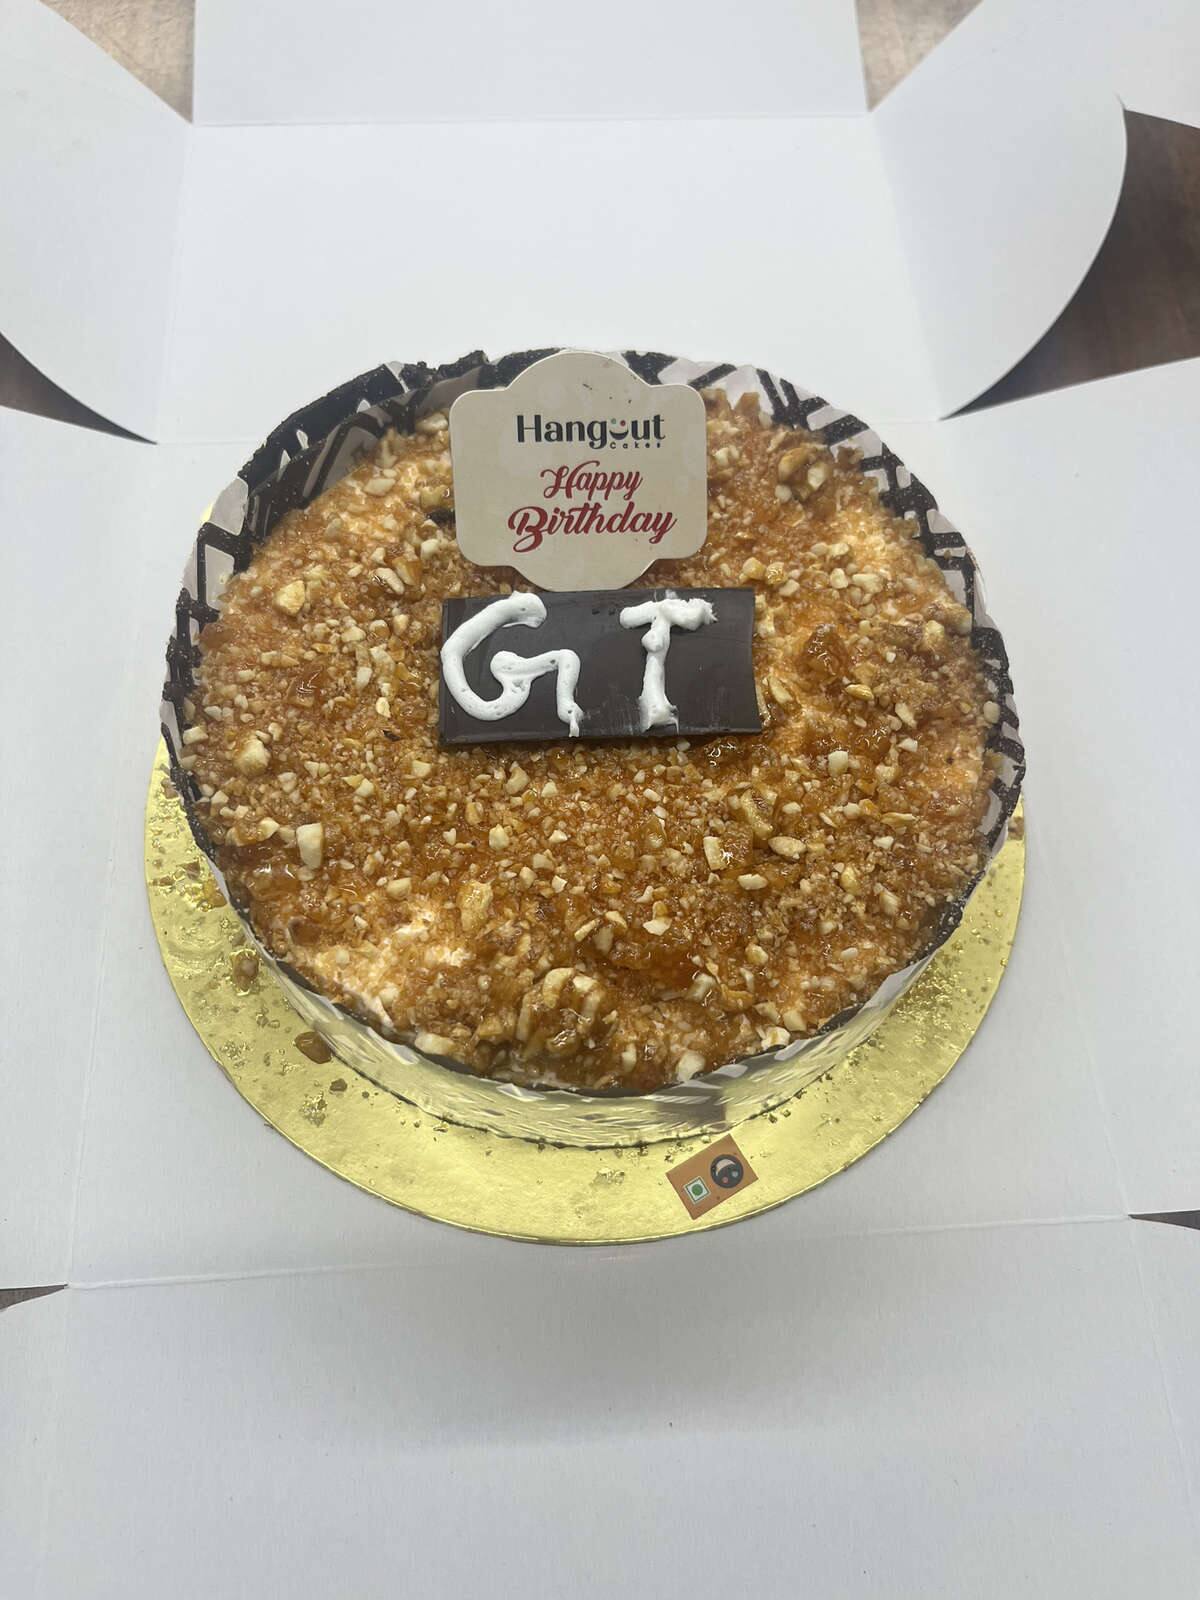 Hangout Cakes  Gourmet Foods hangoutcakes  Instagram photos and videos